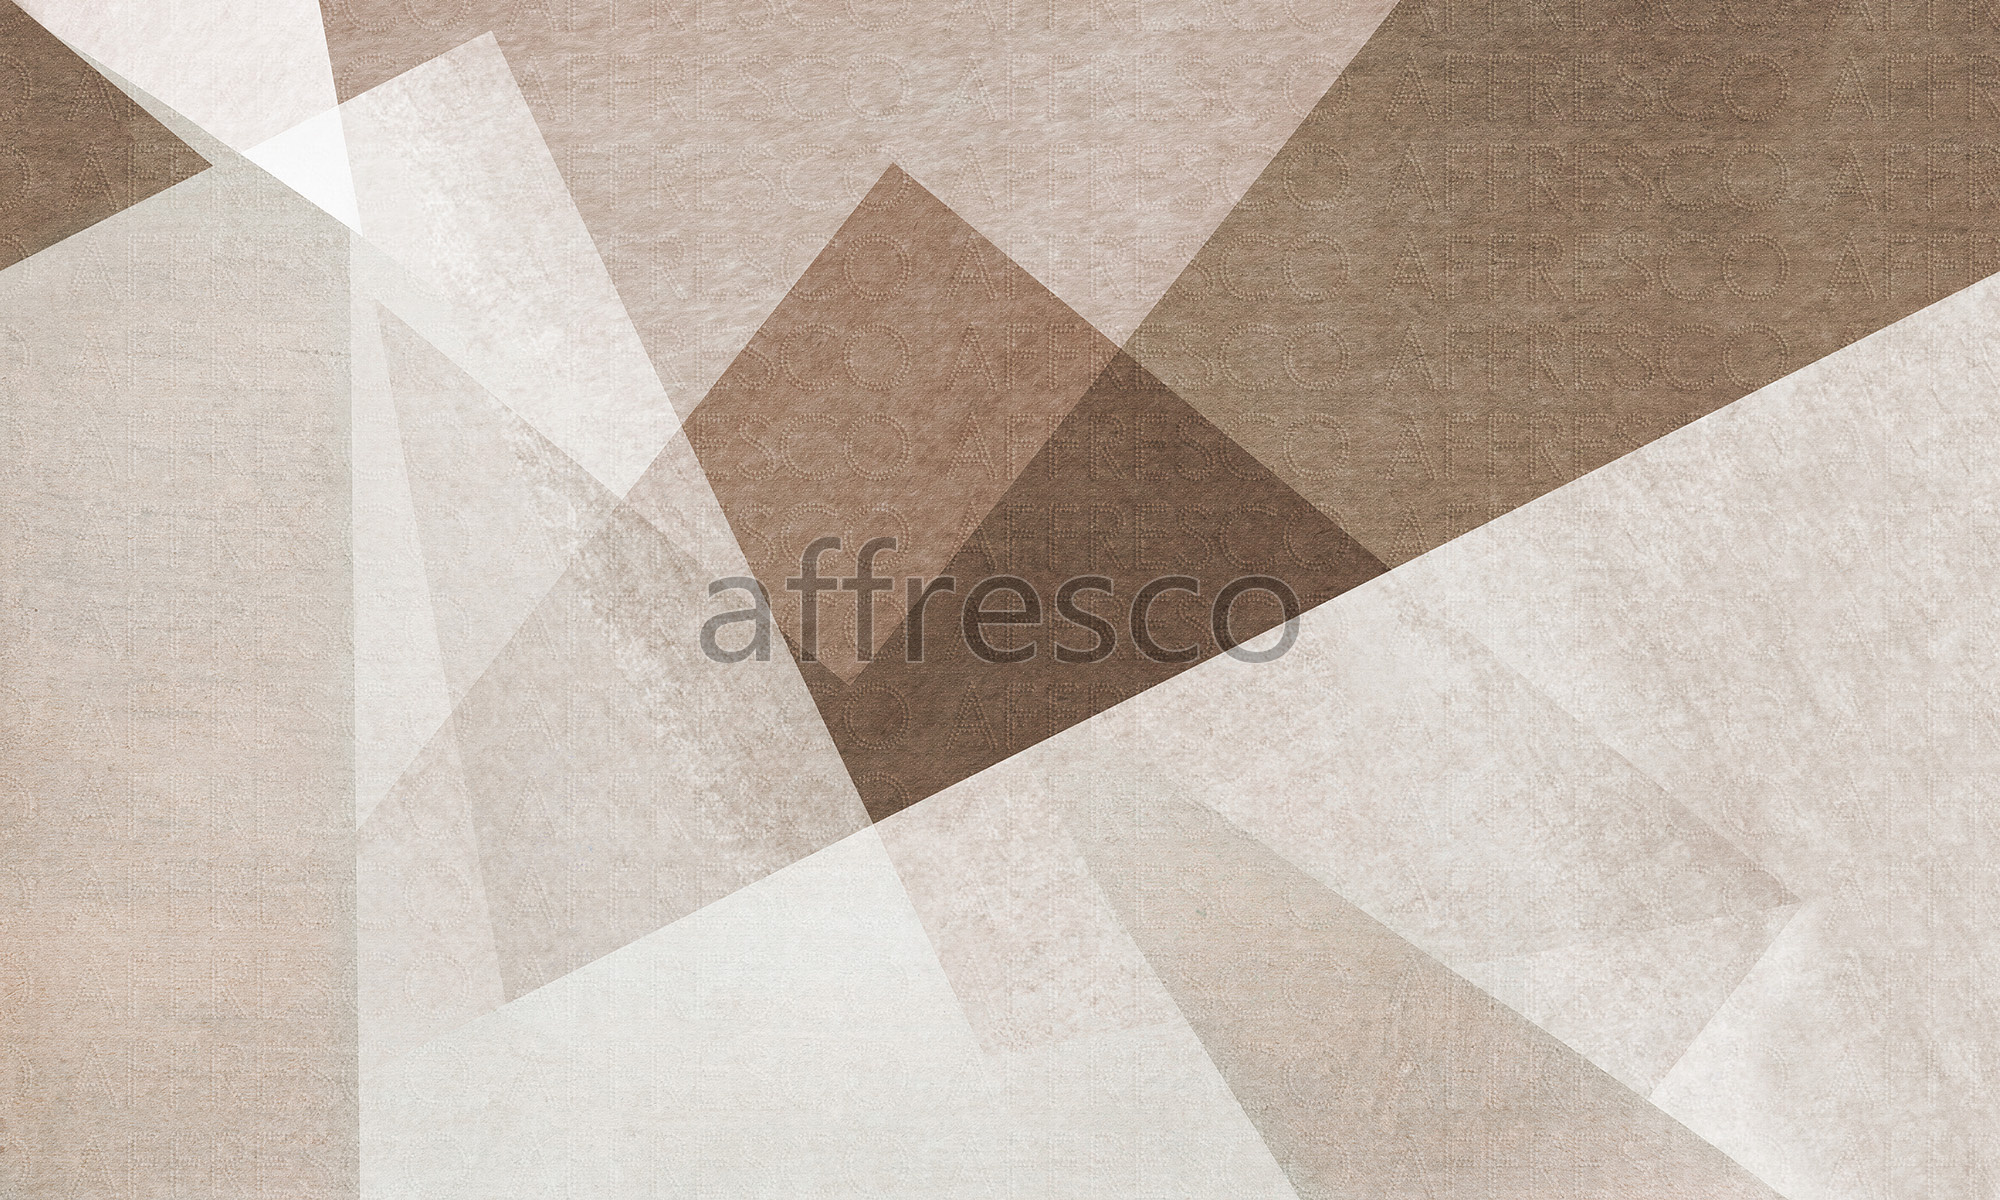 RE807-COL4 | Fine Art | Affresco Factory